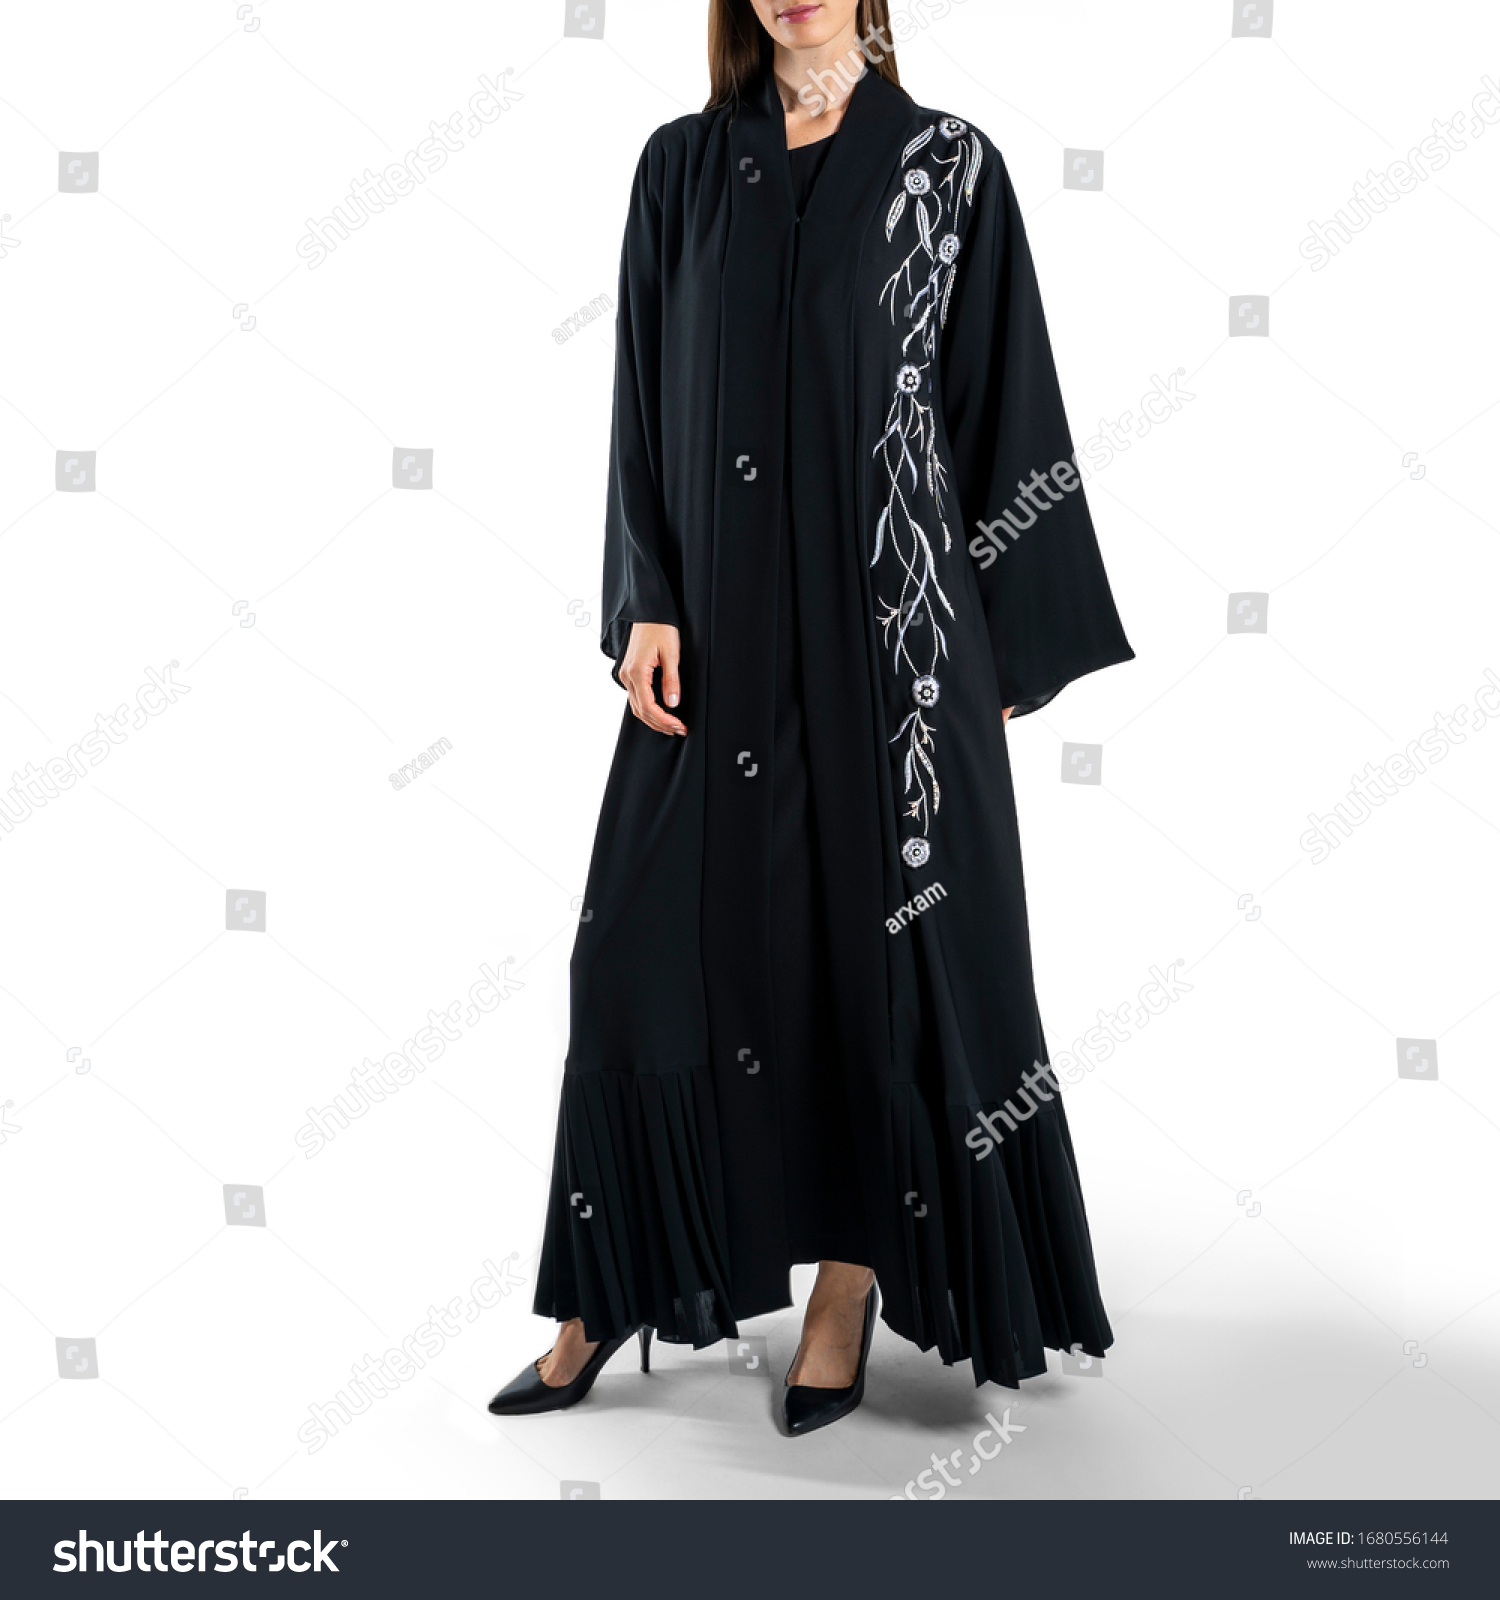 Arabic Muslim woman in stylish abaya, in white background - Image #1680556144